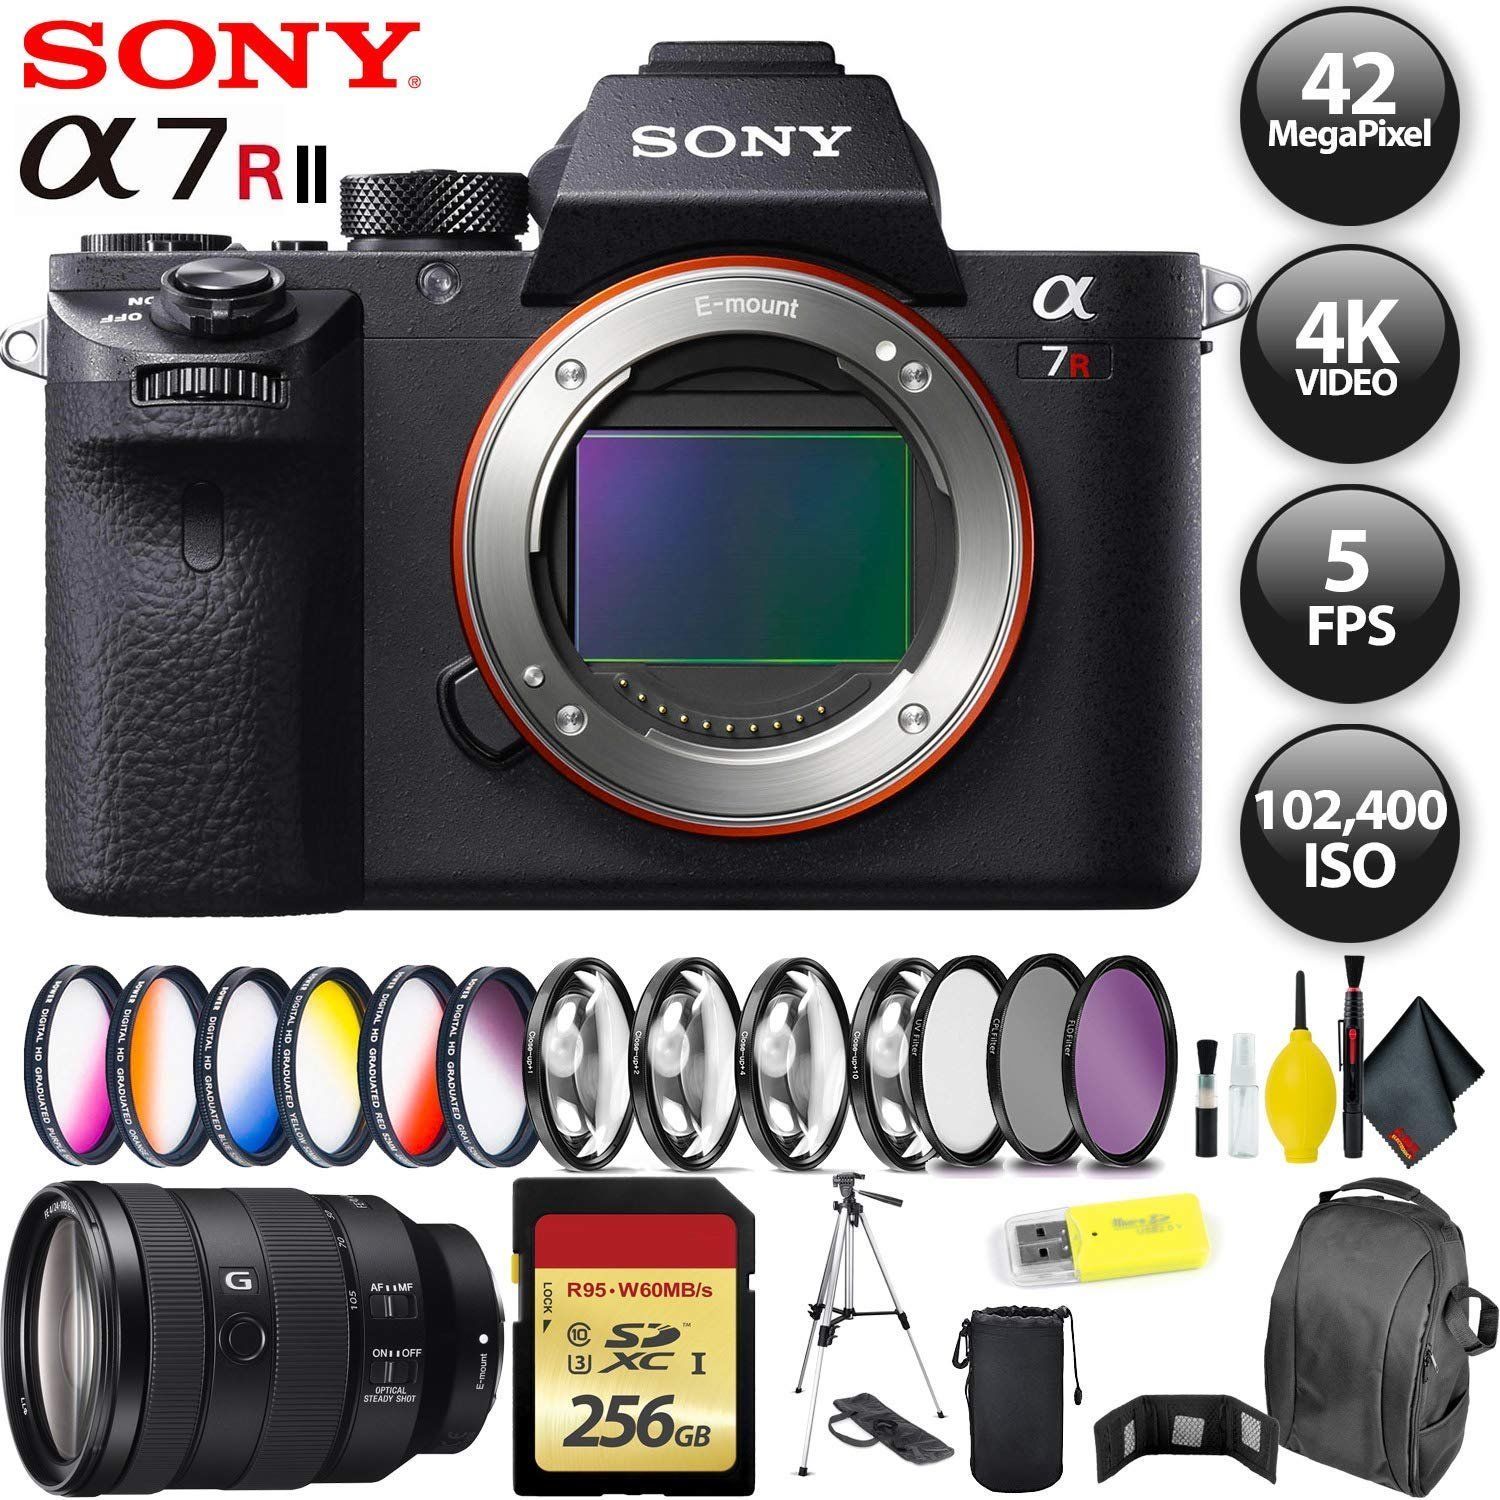 Sony Alpha a7R II Mirrorless Digital Camera + 256GB Memory Card + Sony FE 24-105mm Lens Deluxe Bundle